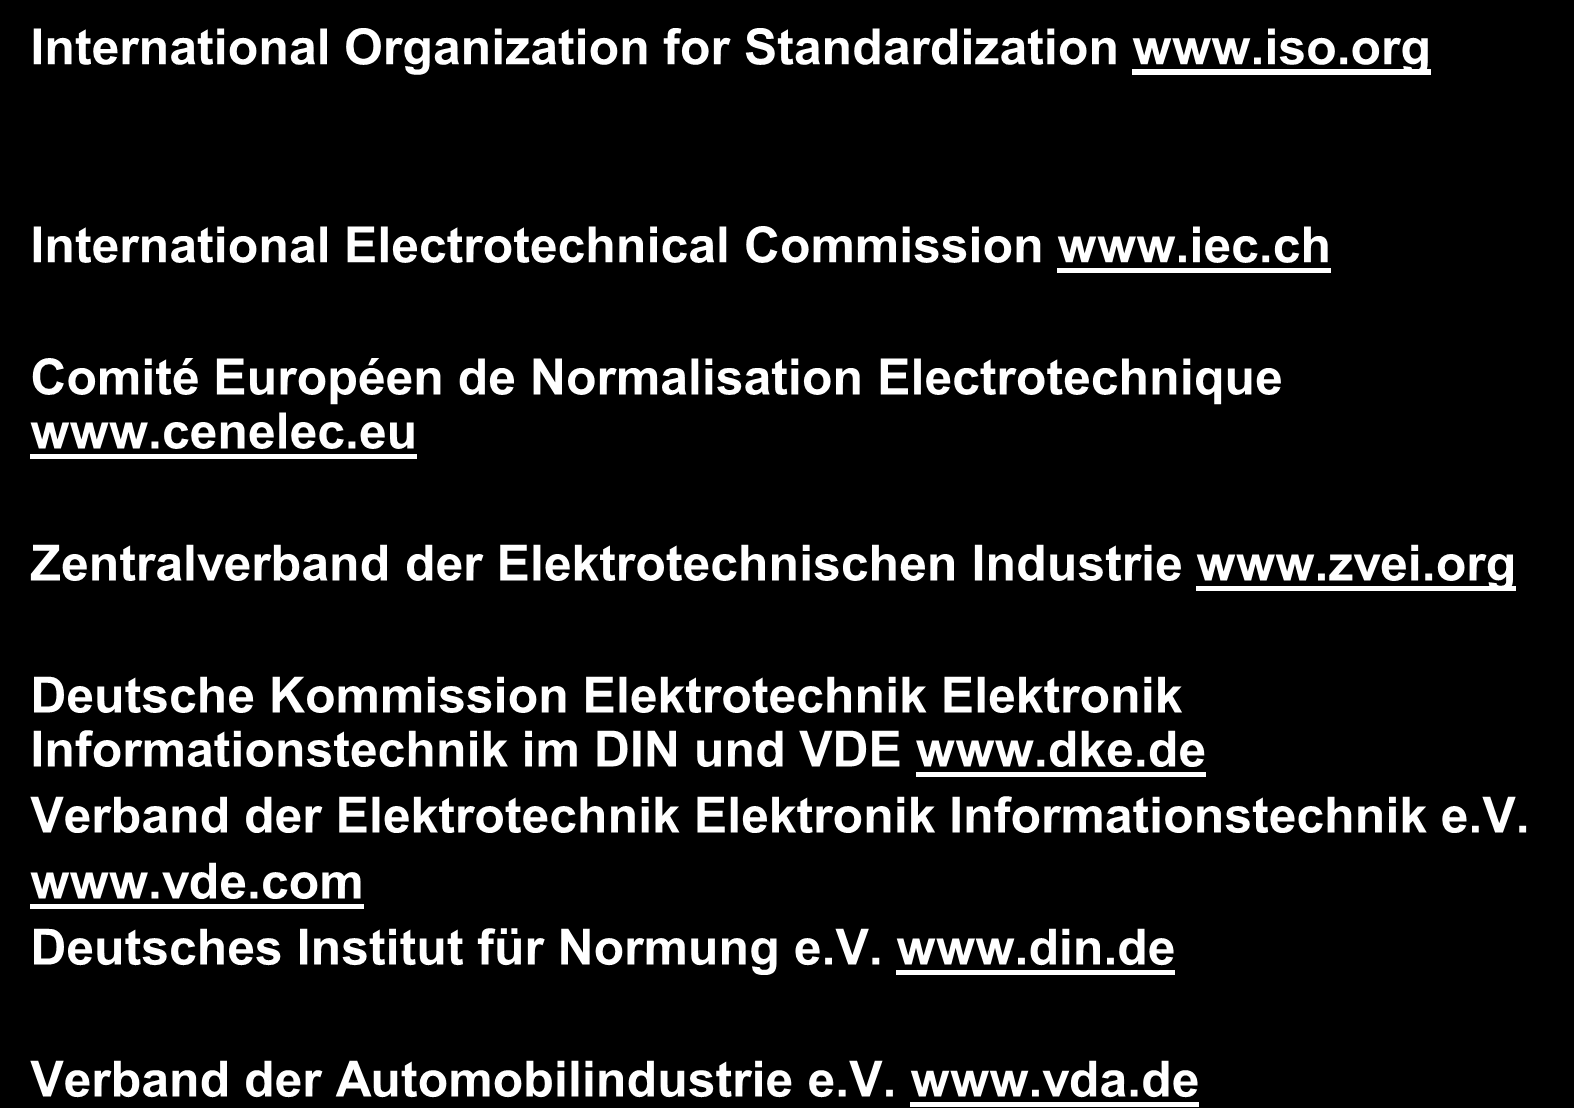 Weltweite Normung / Standards International Organization for Standardization www.iso.